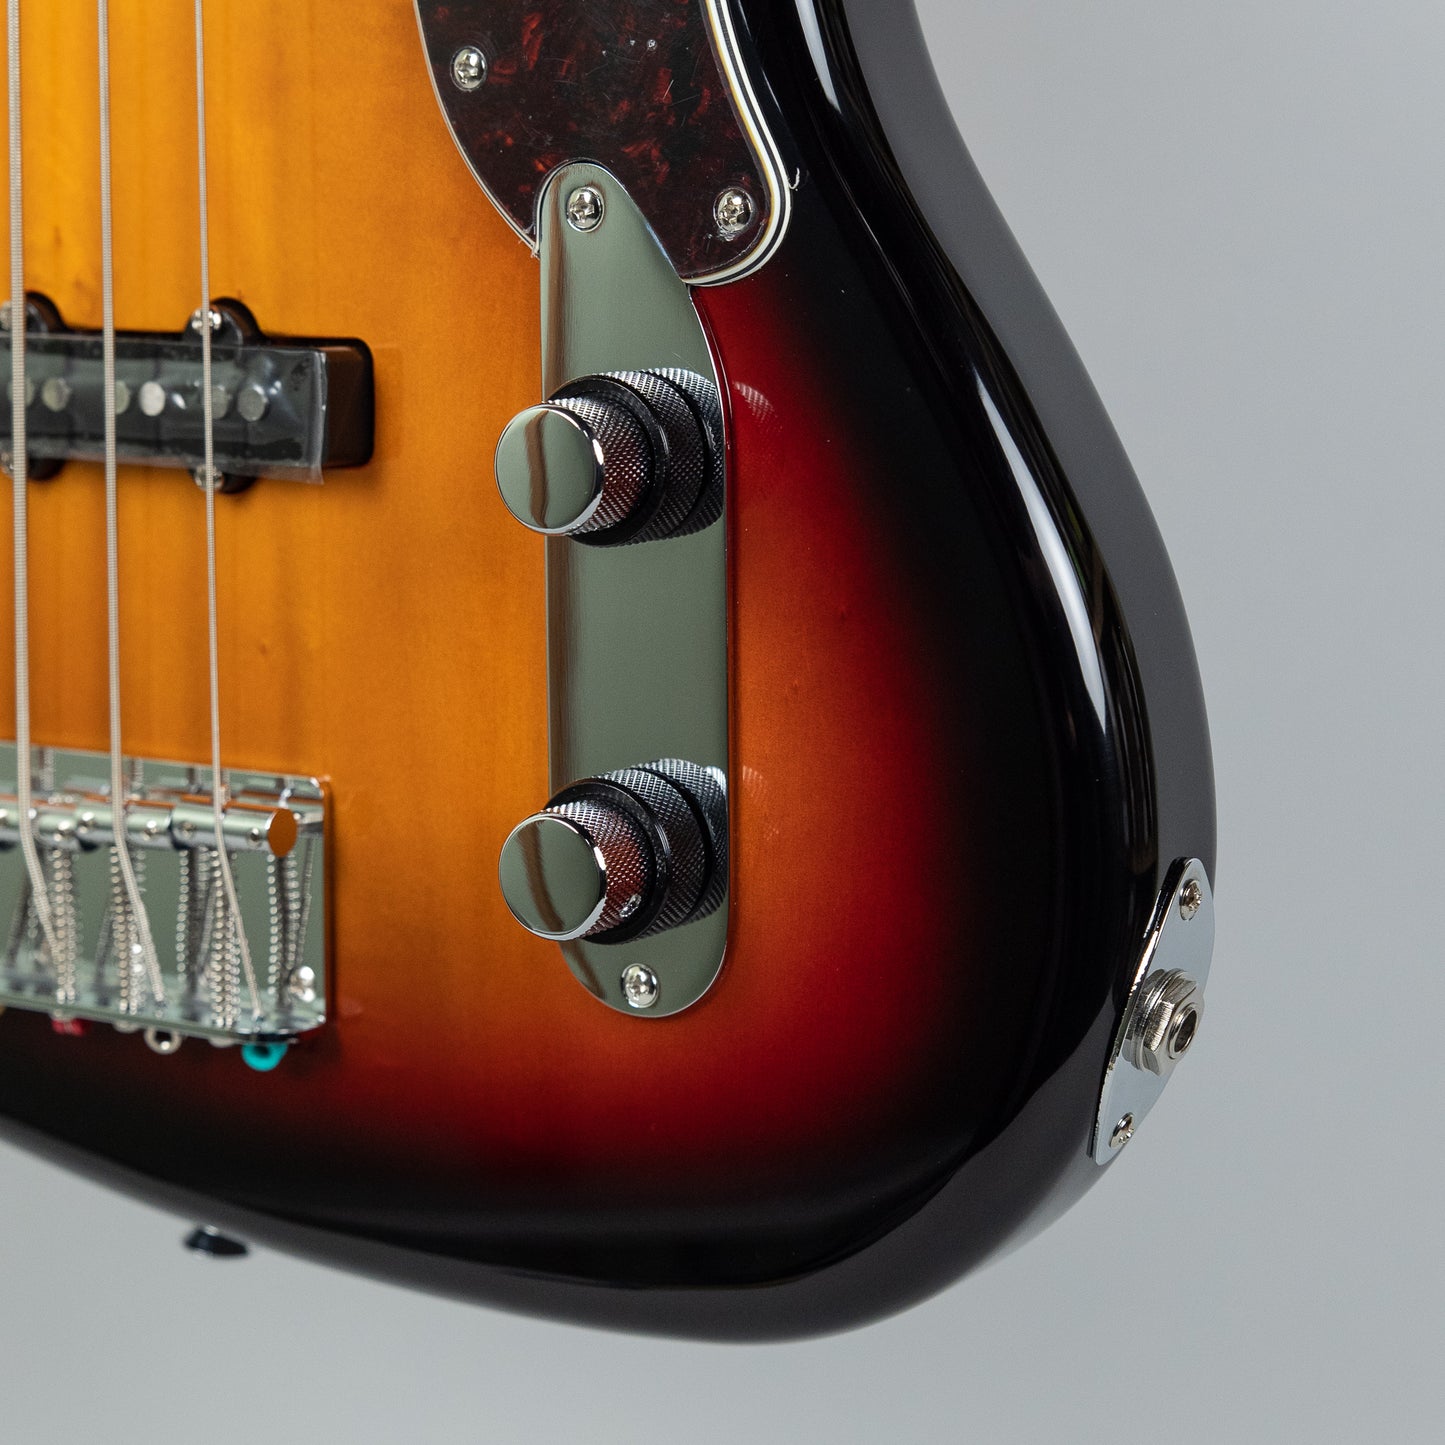 Squier Paranormal Jazz Bass '54 in 3-Color Sunburst